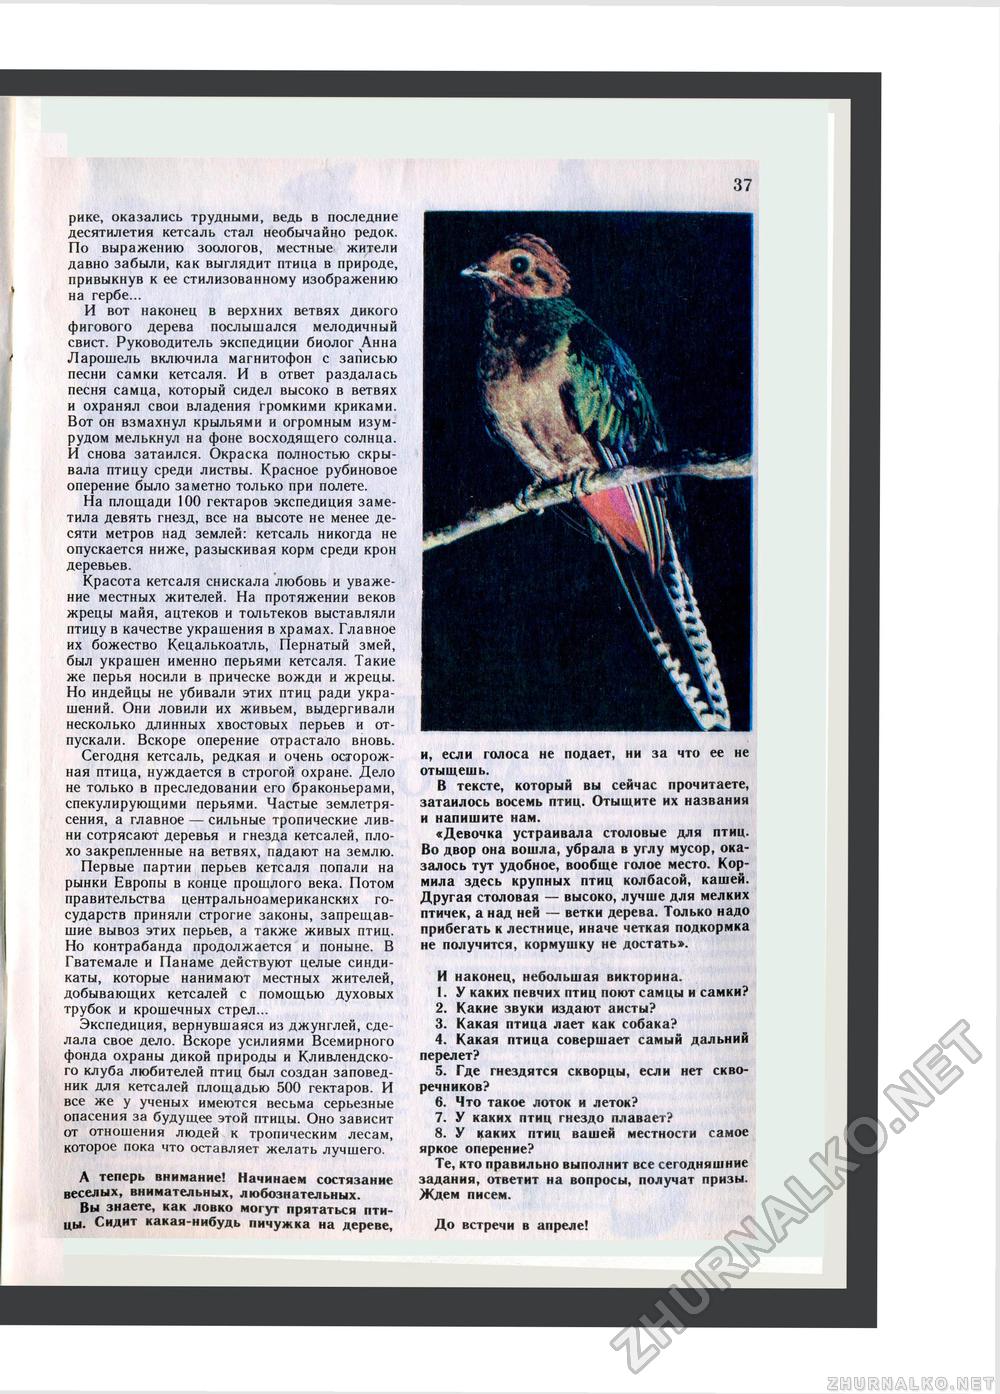 Юный Натуралист 1984-03, страница 39